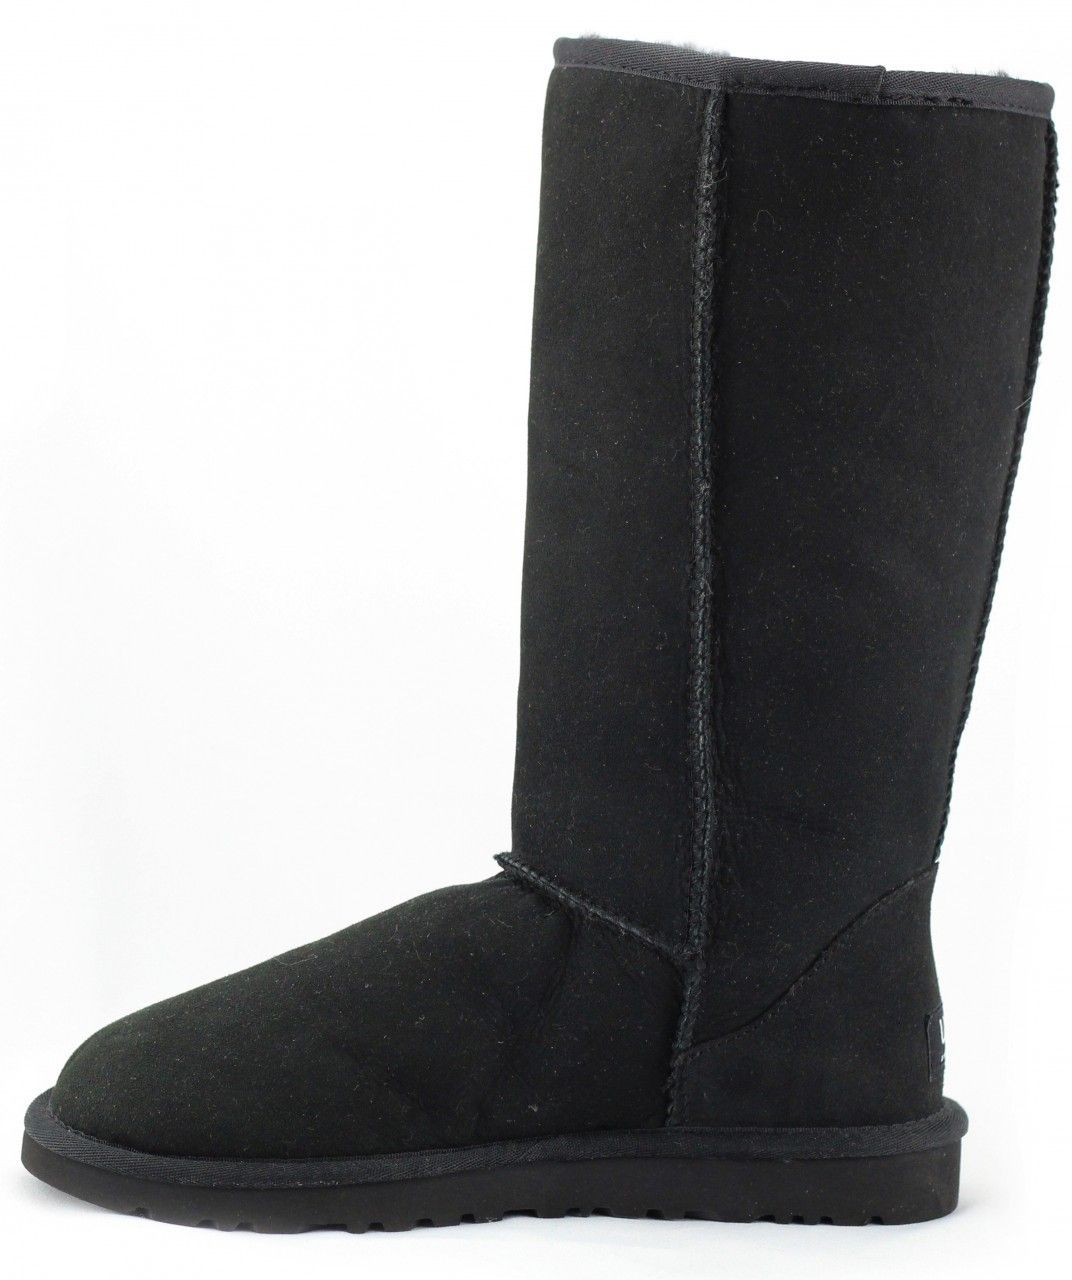 black ugg australia boots